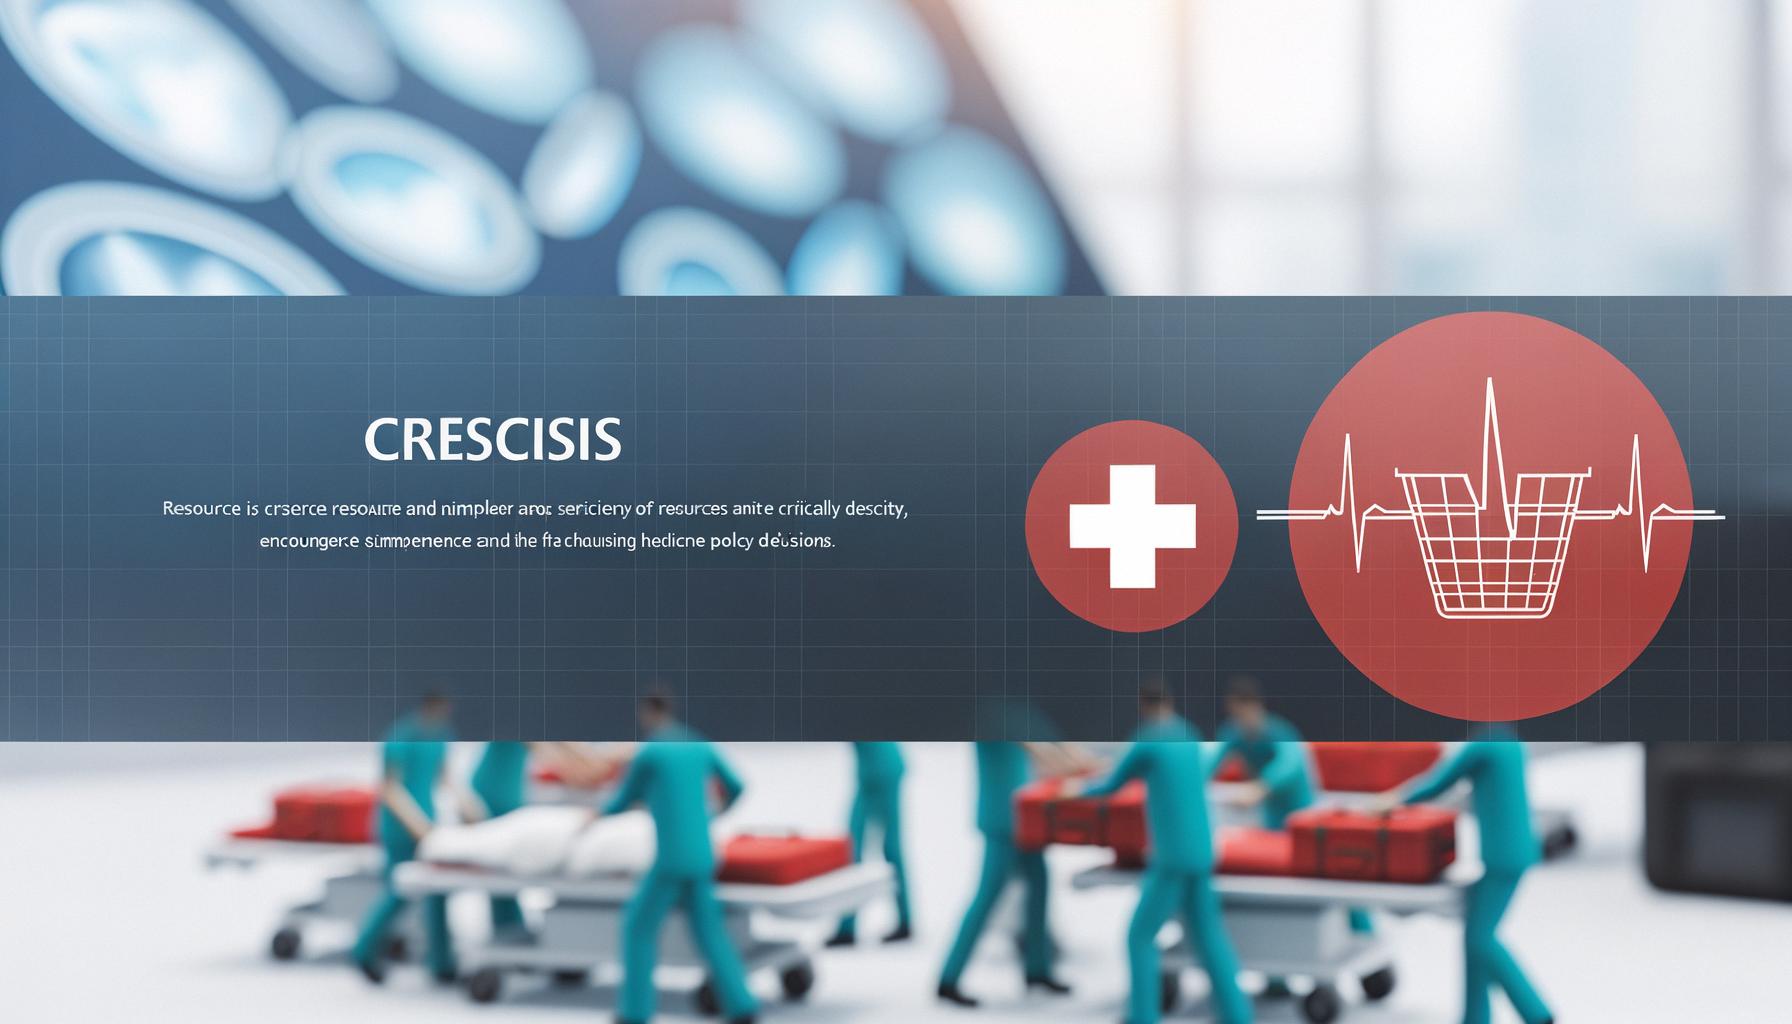 Healthcare systems under strain manage emergency medicine amid severe crises worldwide.